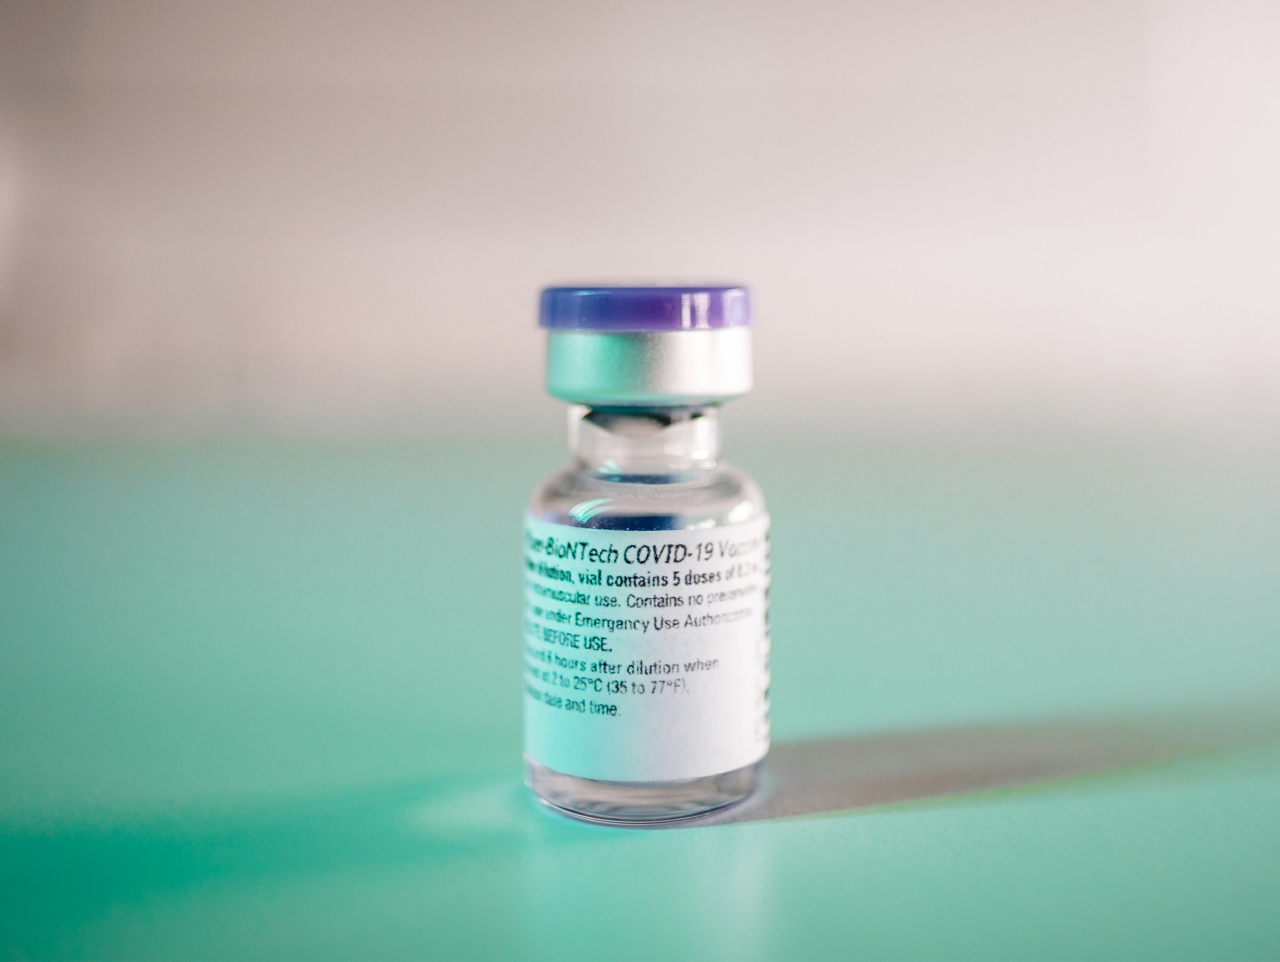 Ampulle mit Covid-19 Impfstoffkandidat